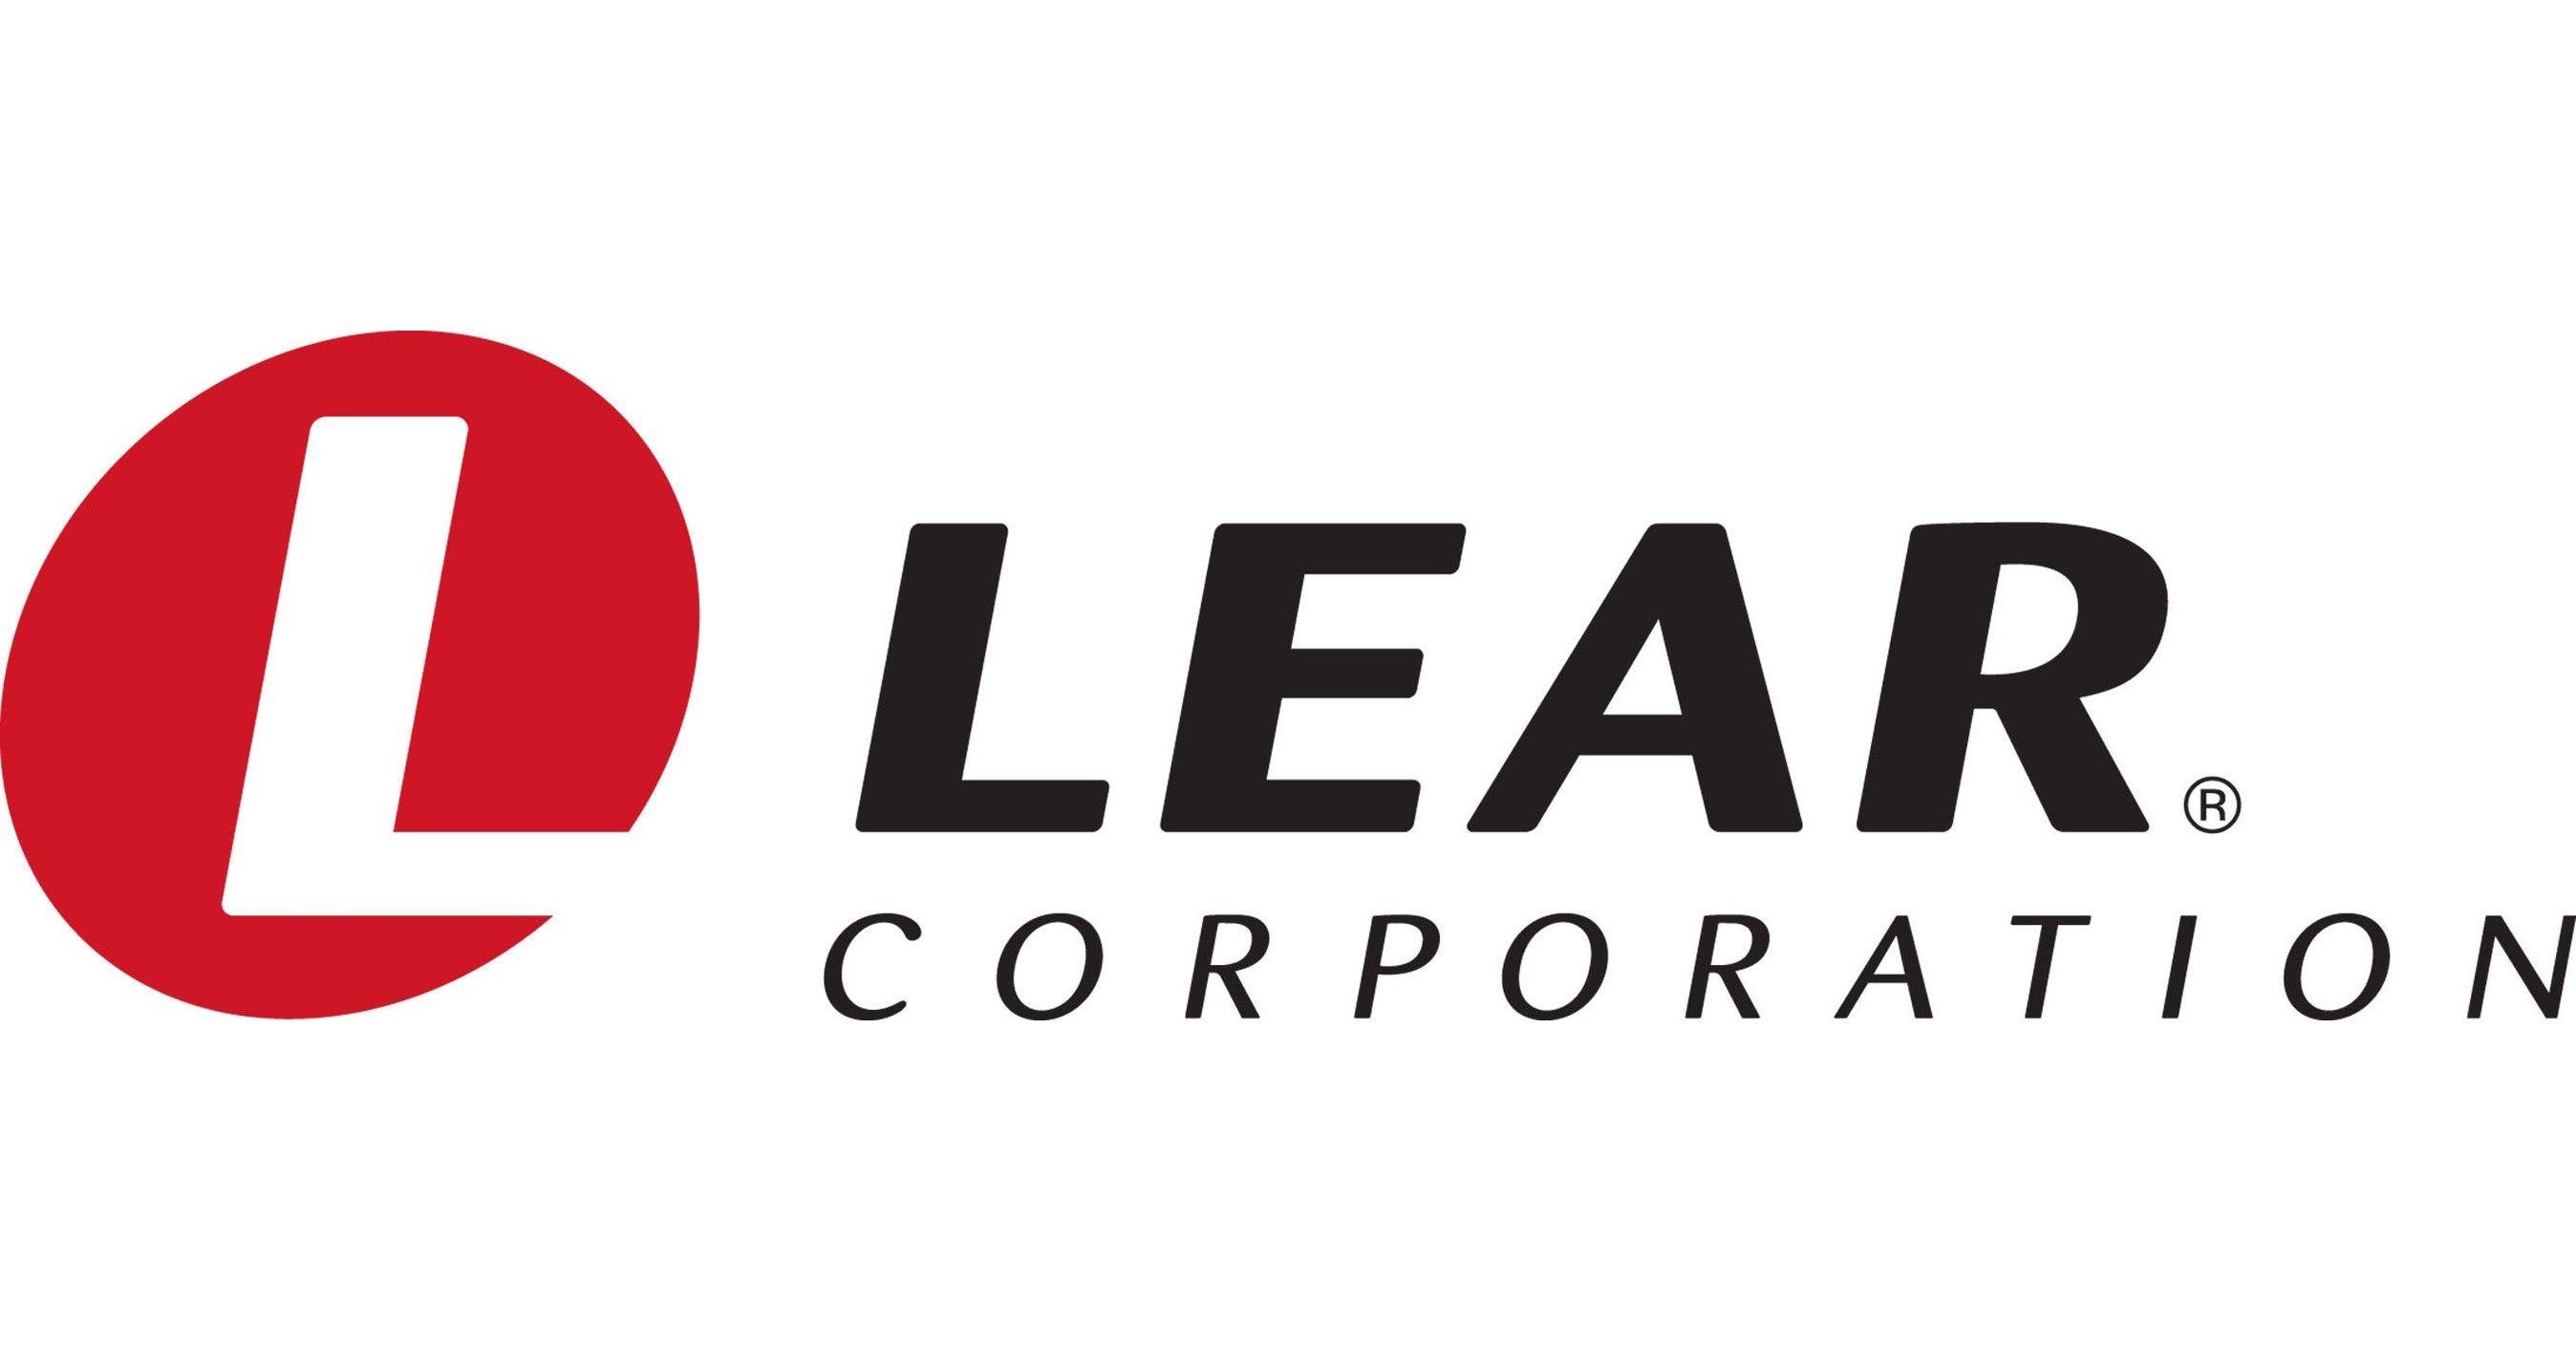 Lear Logo - Lear Corporation Logo - Advanced Manufacturing